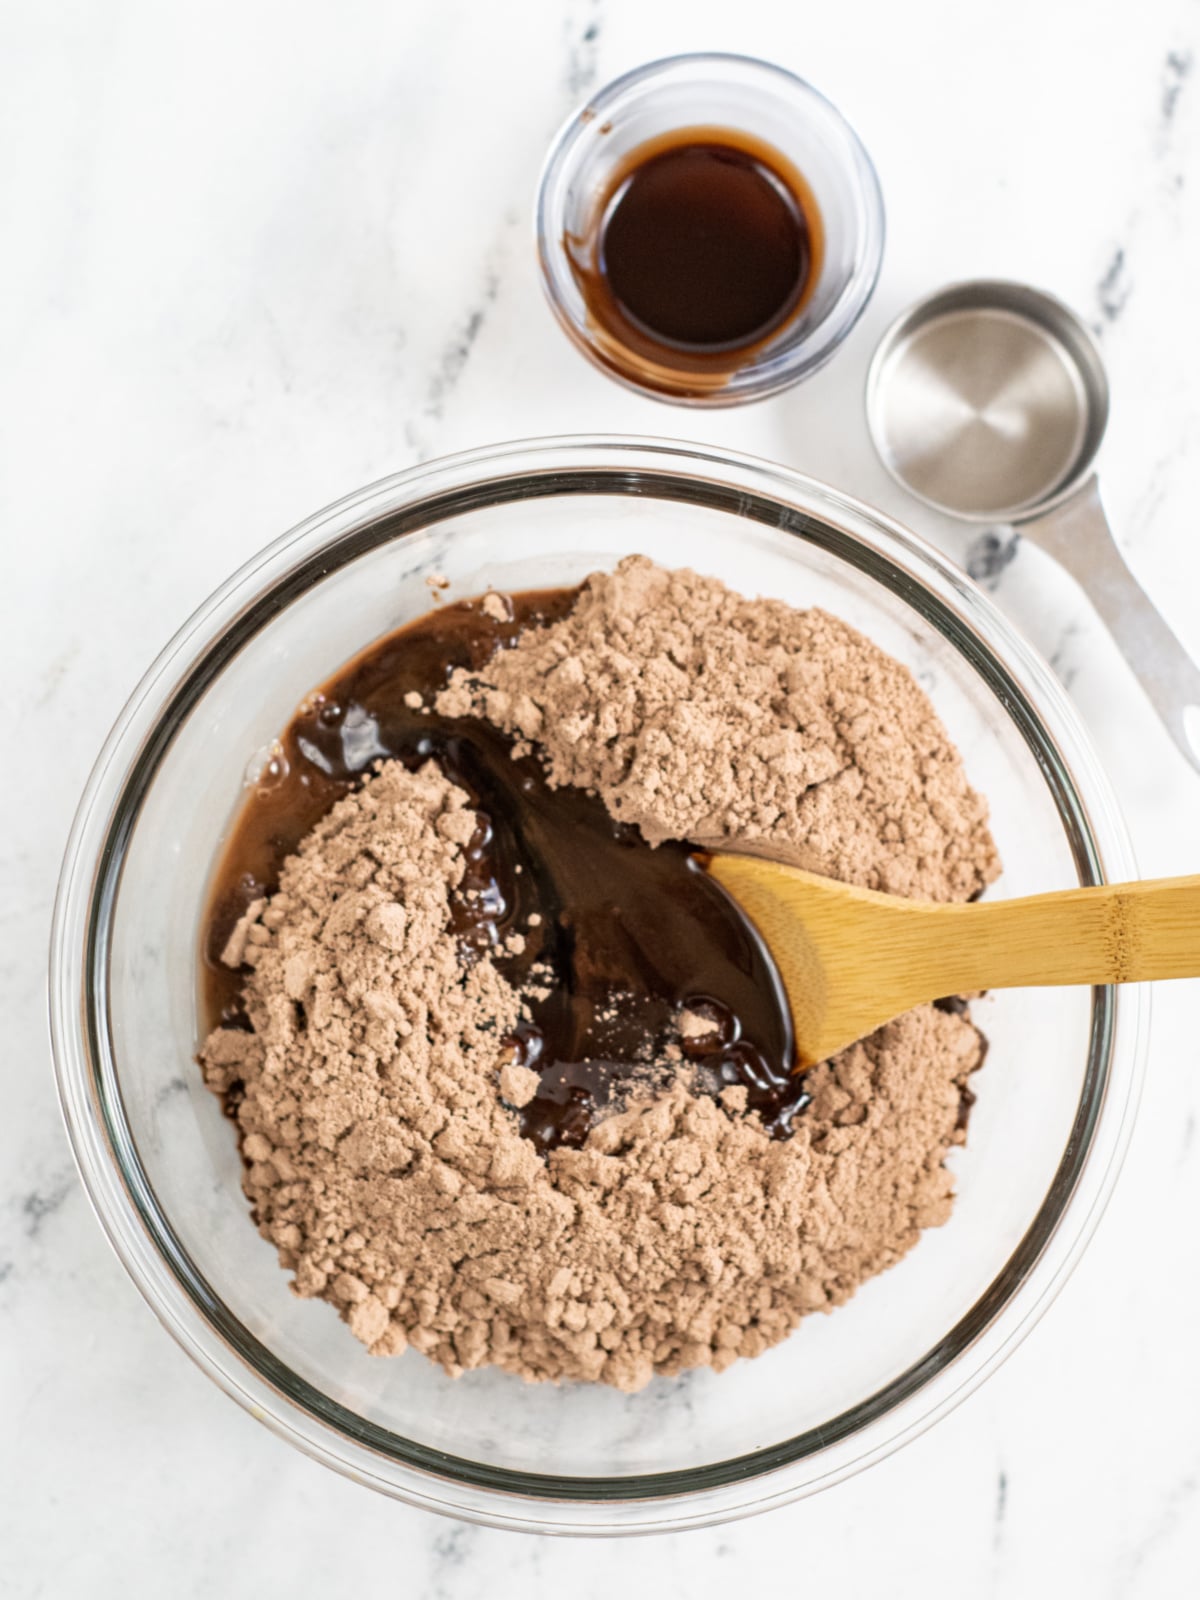 Mix together brownie ingredients